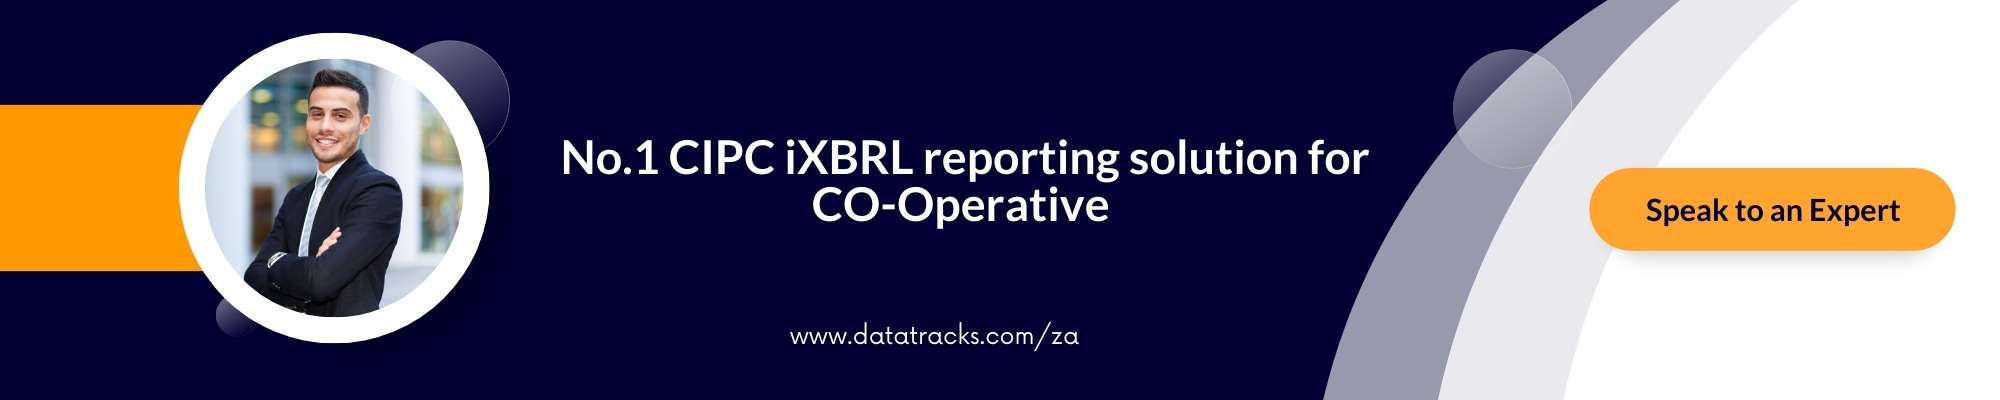 CIPC XBRL Solutions for Cooperative_DataTracks